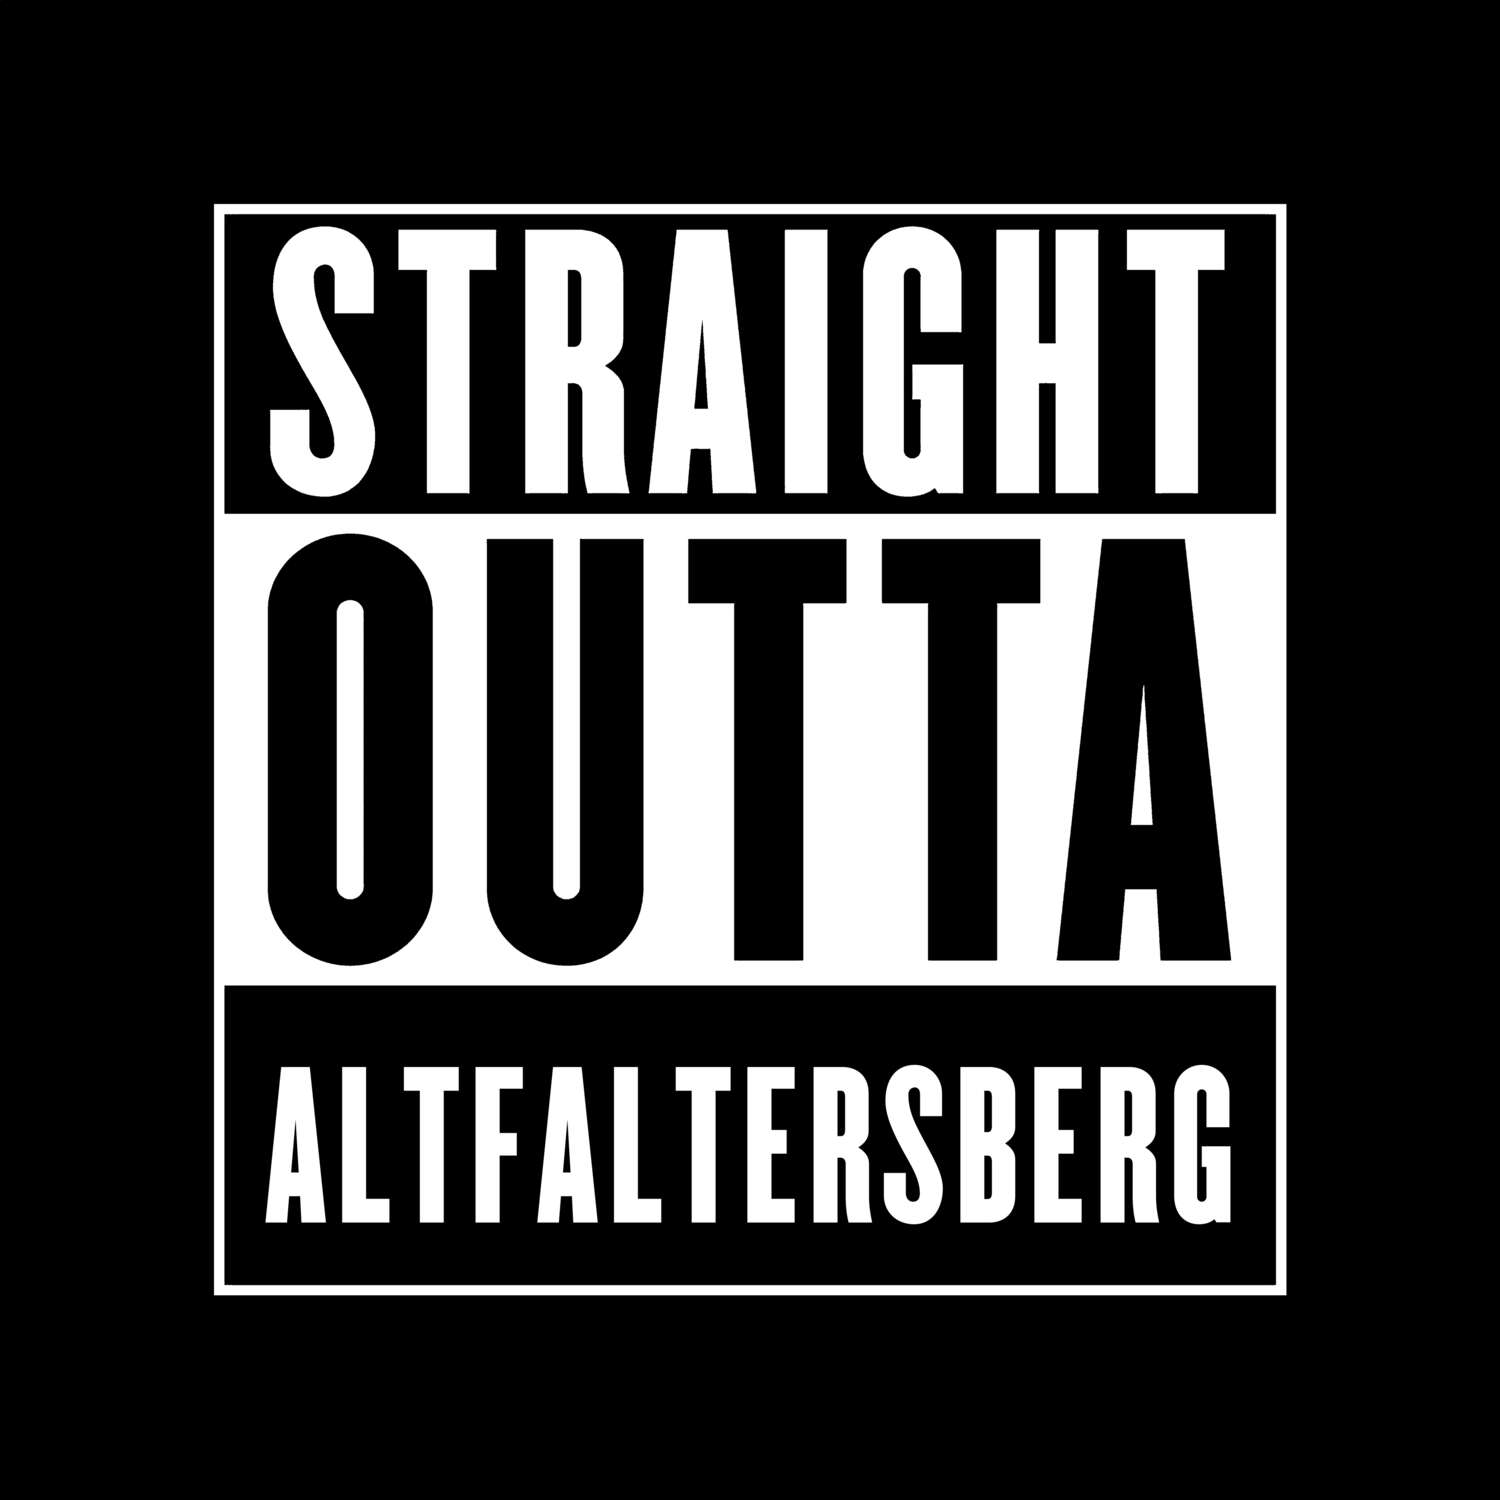 Altfaltersberg T-Shirt »Straight Outta«